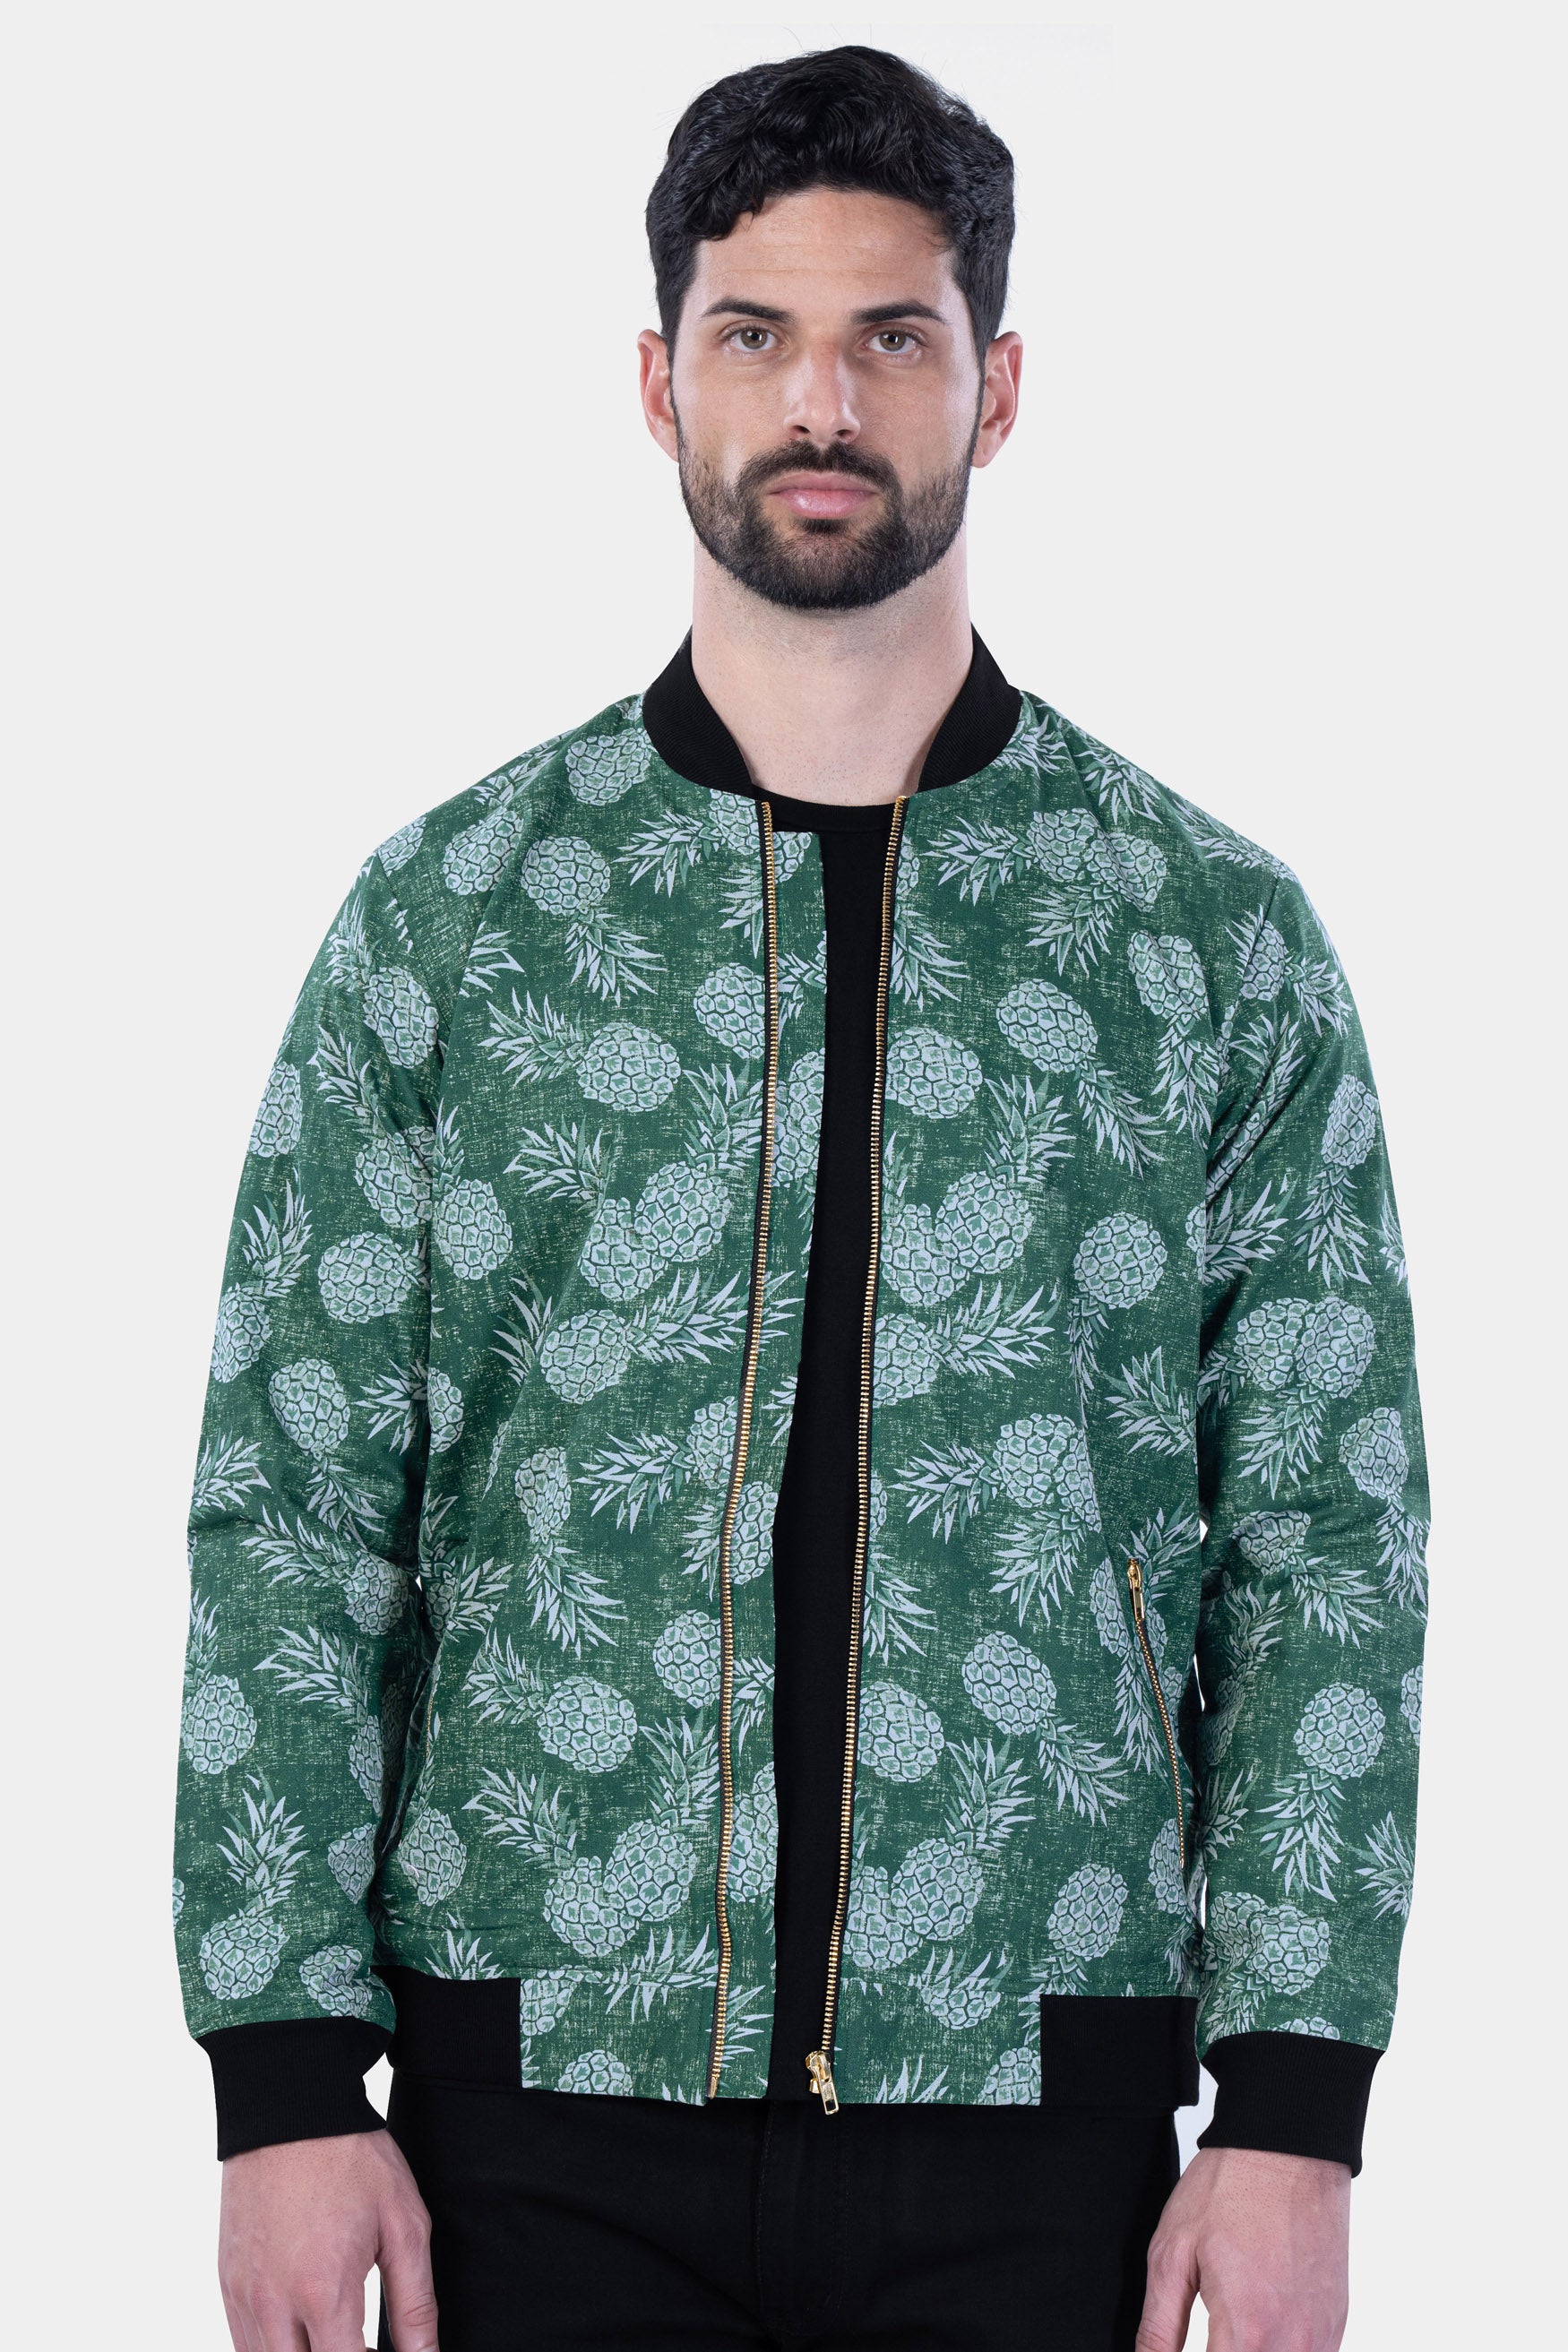 Plantation Green Pineapple Printed Premium Cotton Bomber Jacket